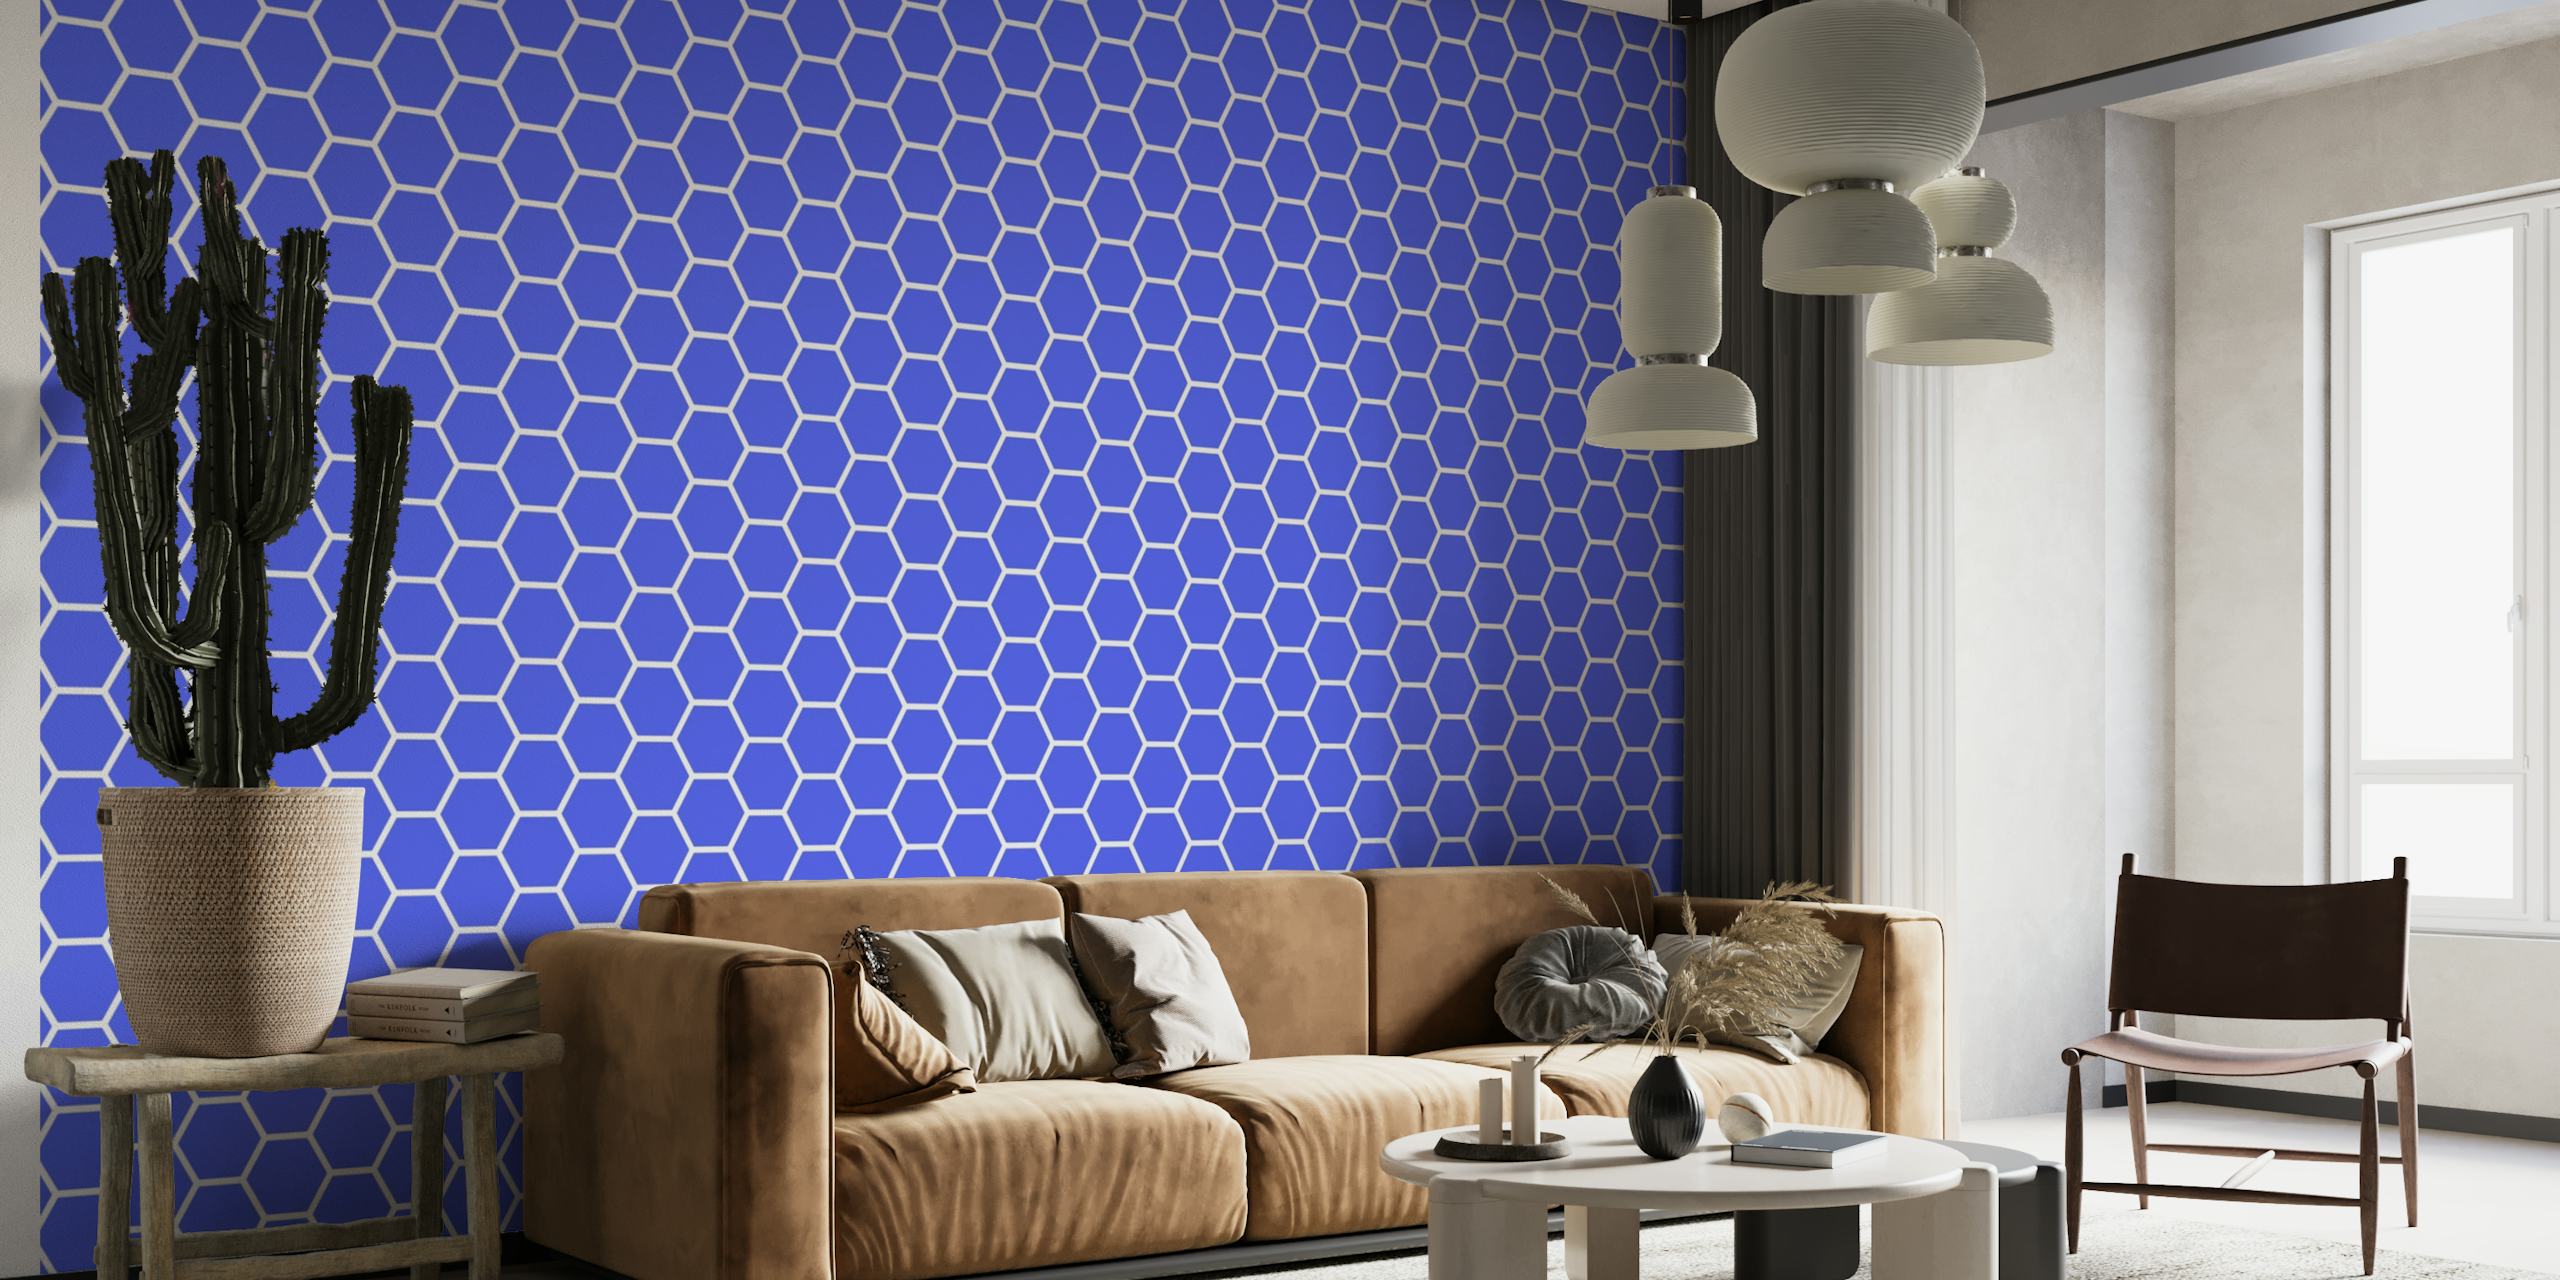 Bright blue hexagonal pattern wall mural for contemporary interior decor.